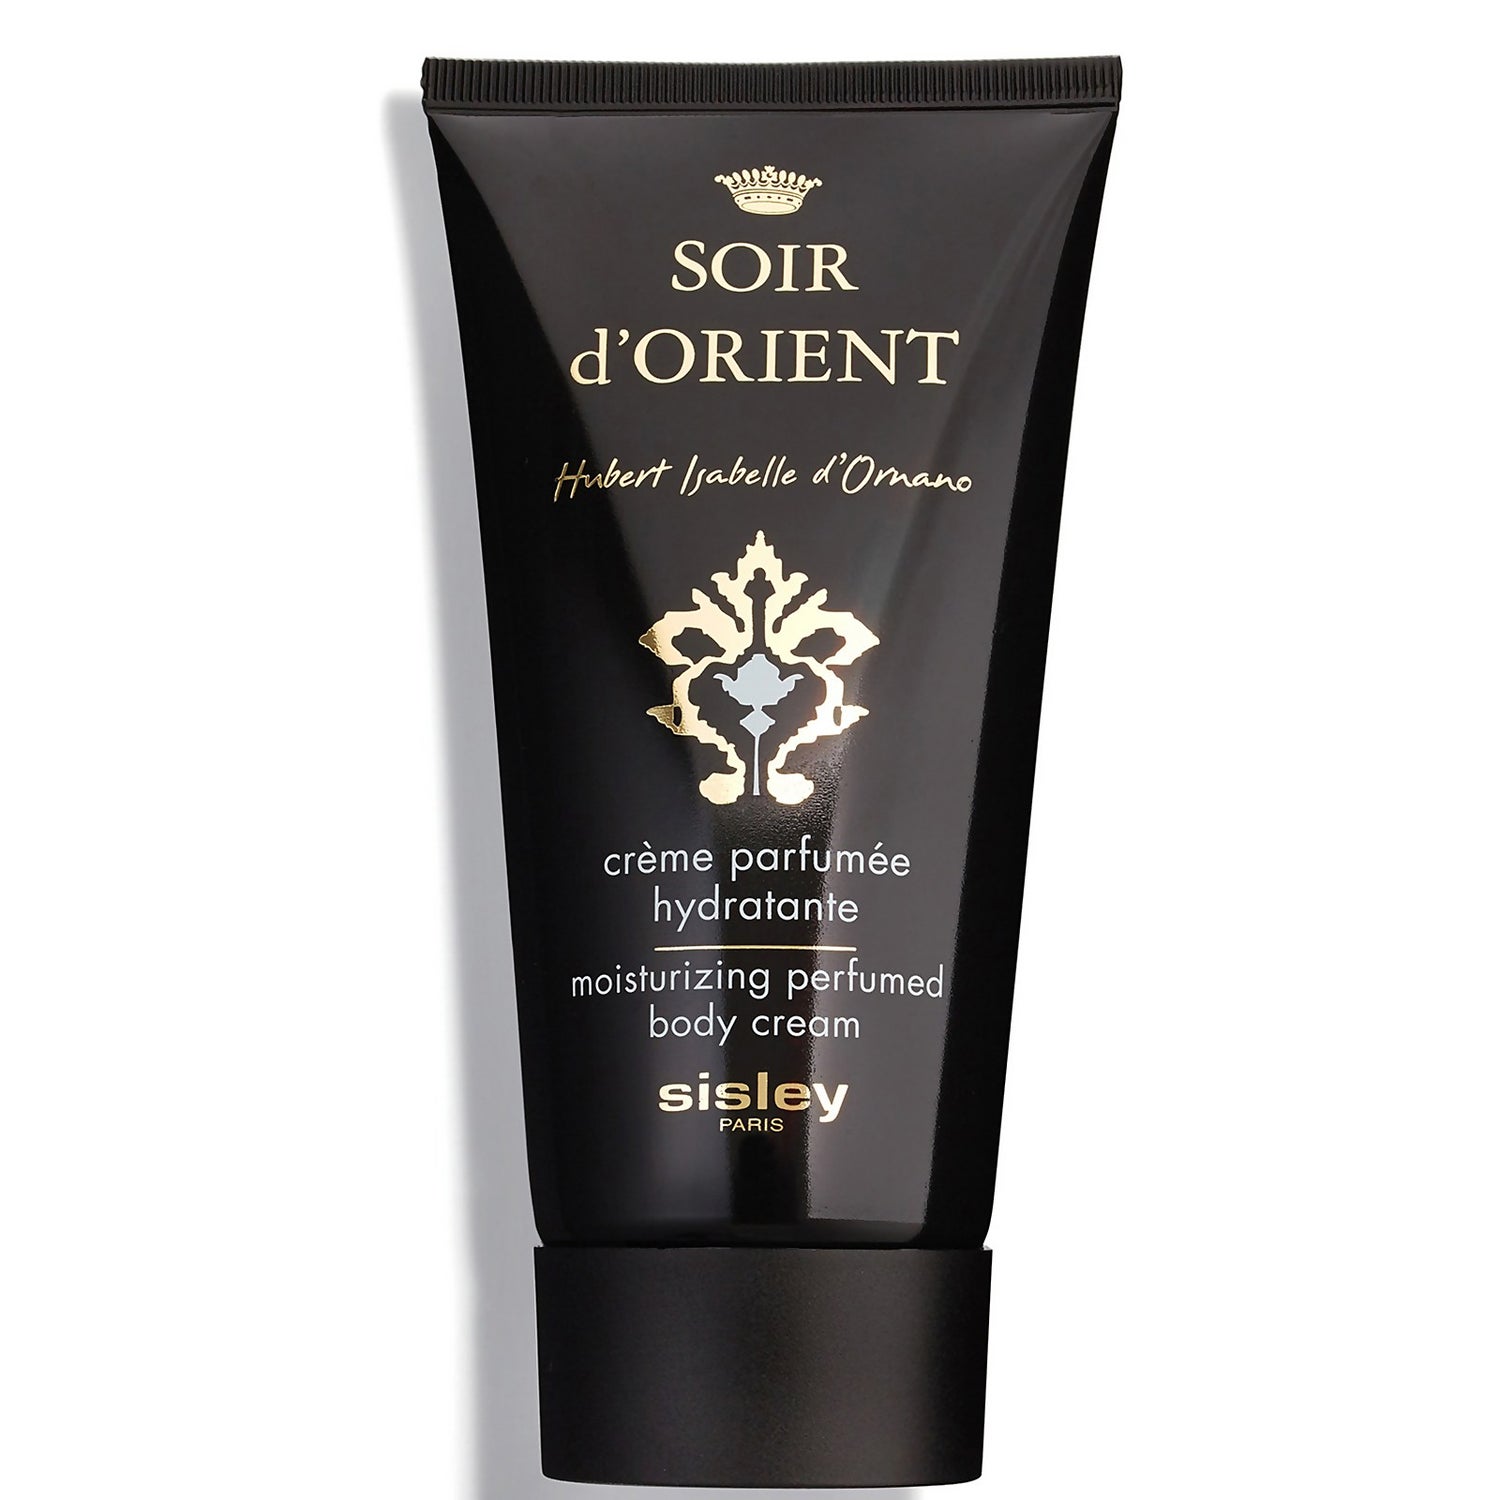 SISLEY-PARIS Soir d'Orient Moisturising Perfumed Body Cream 150ml